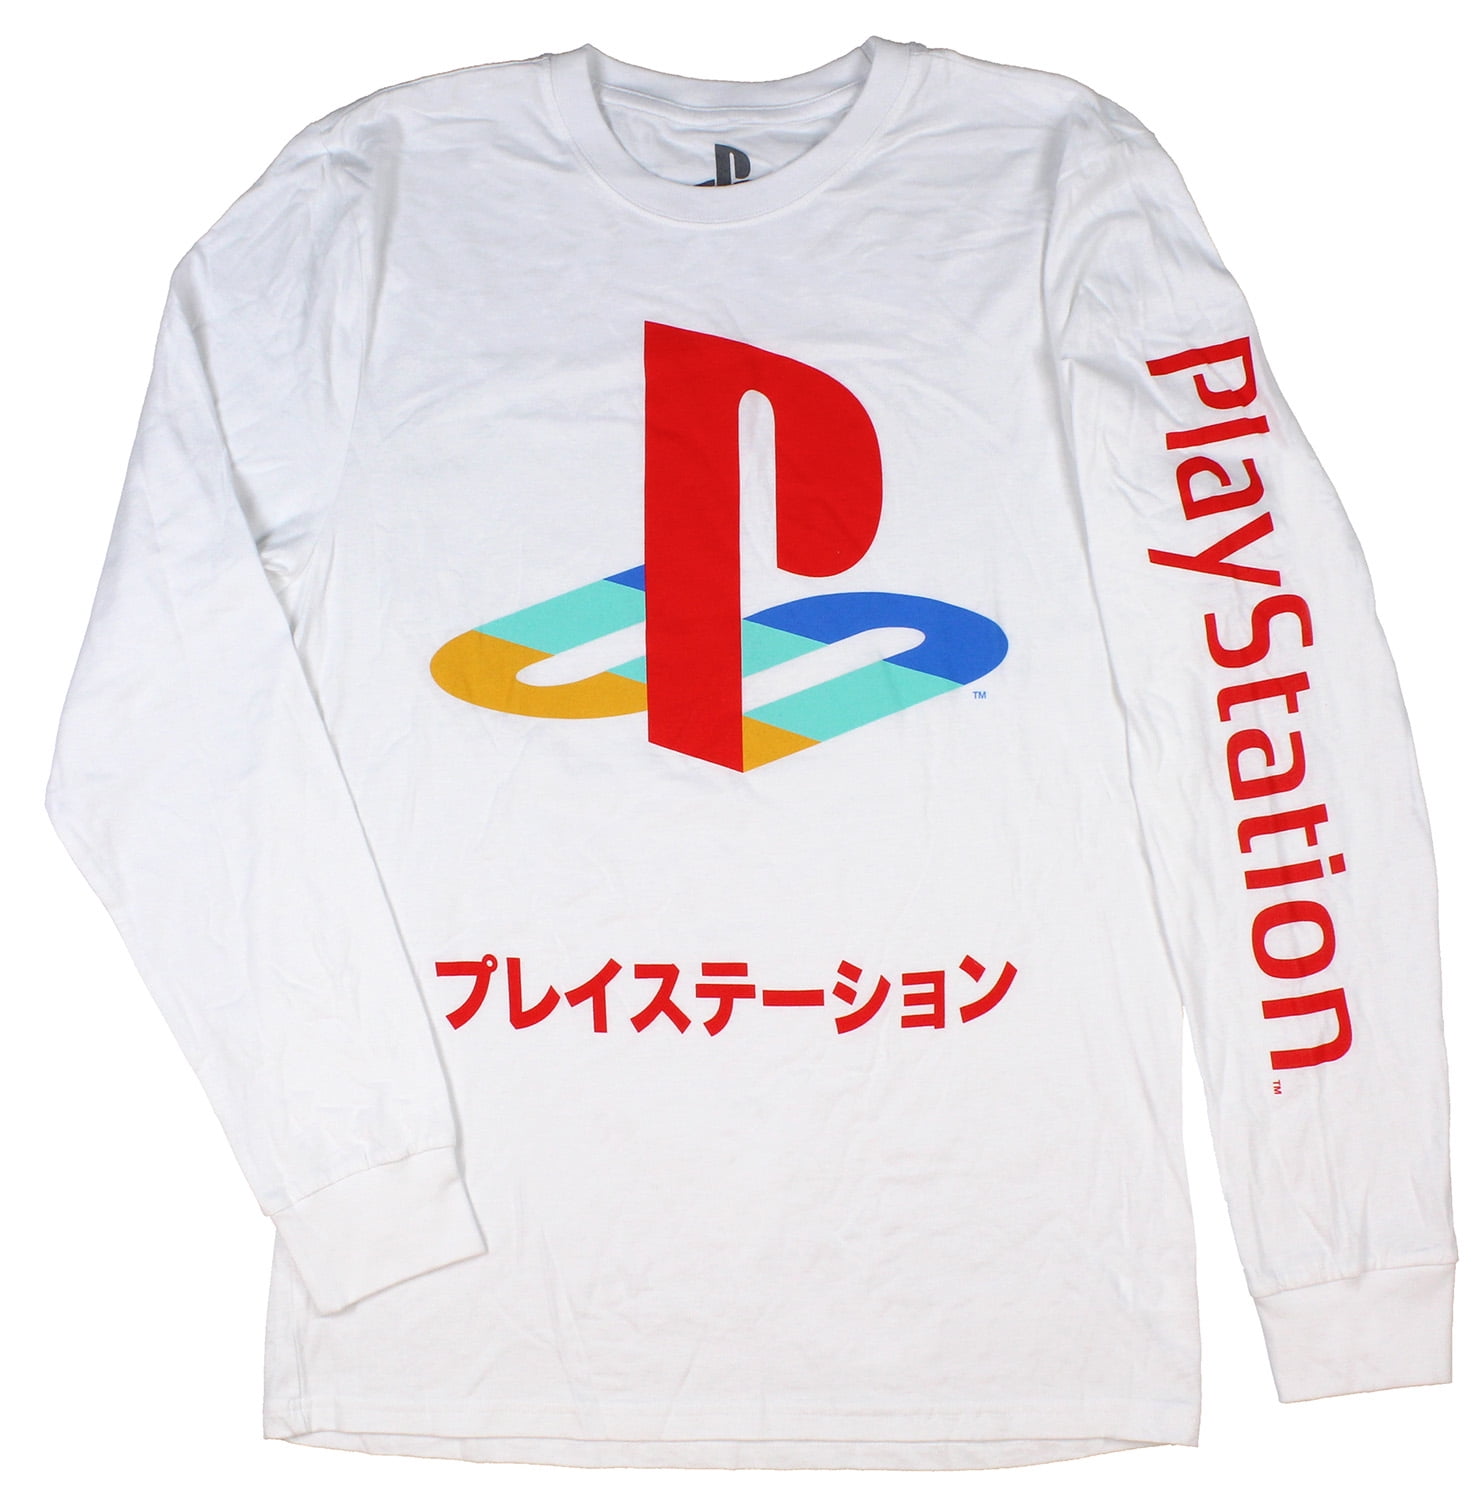 PS4 Playstation Crewneck Gaming Men's Sweatshirt Pullover Adult Sizes S-2XL